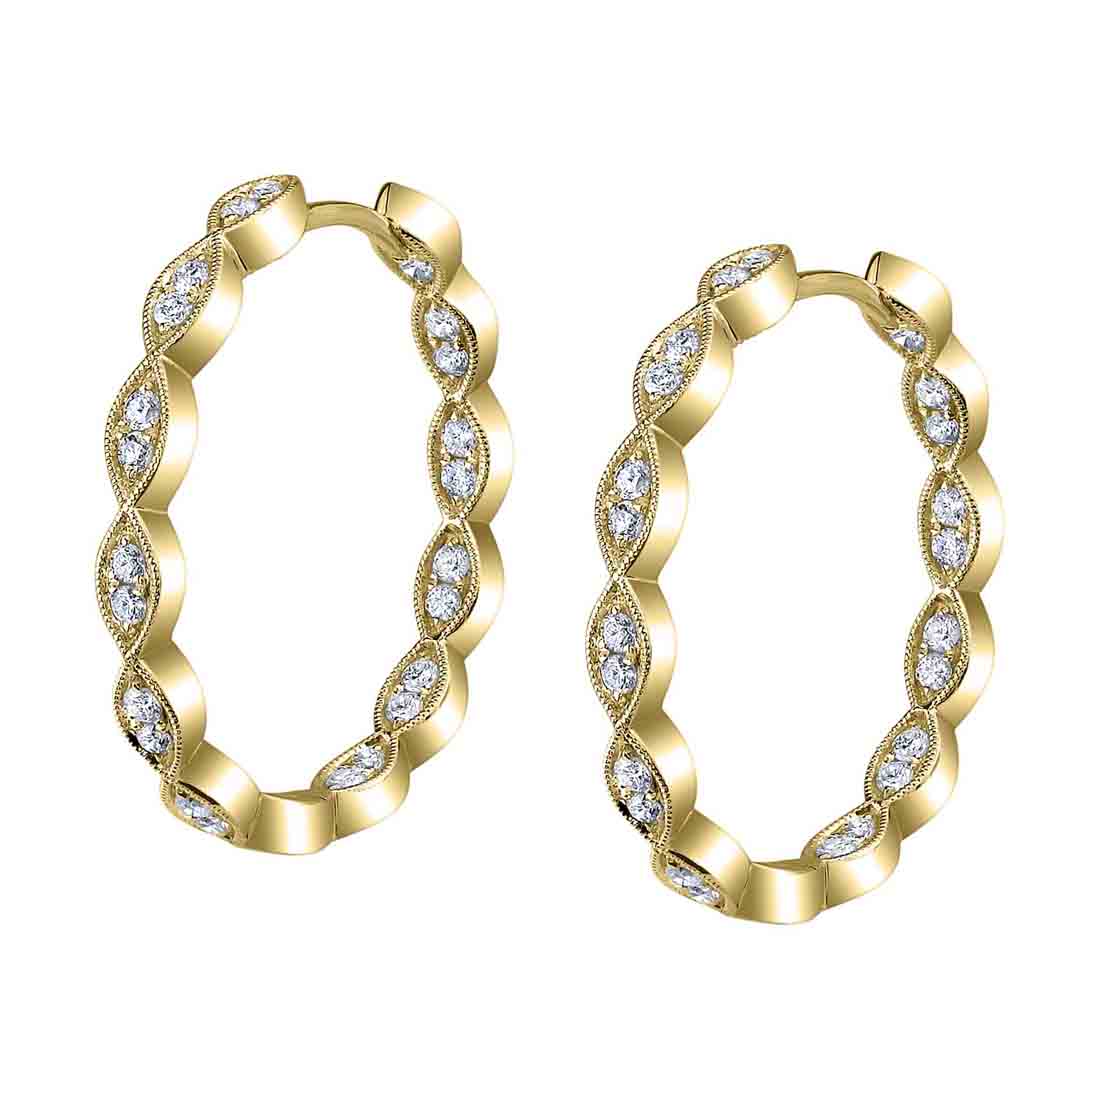 Vintage Inspired Diamond Hoop Earrings | Sylvie Collection